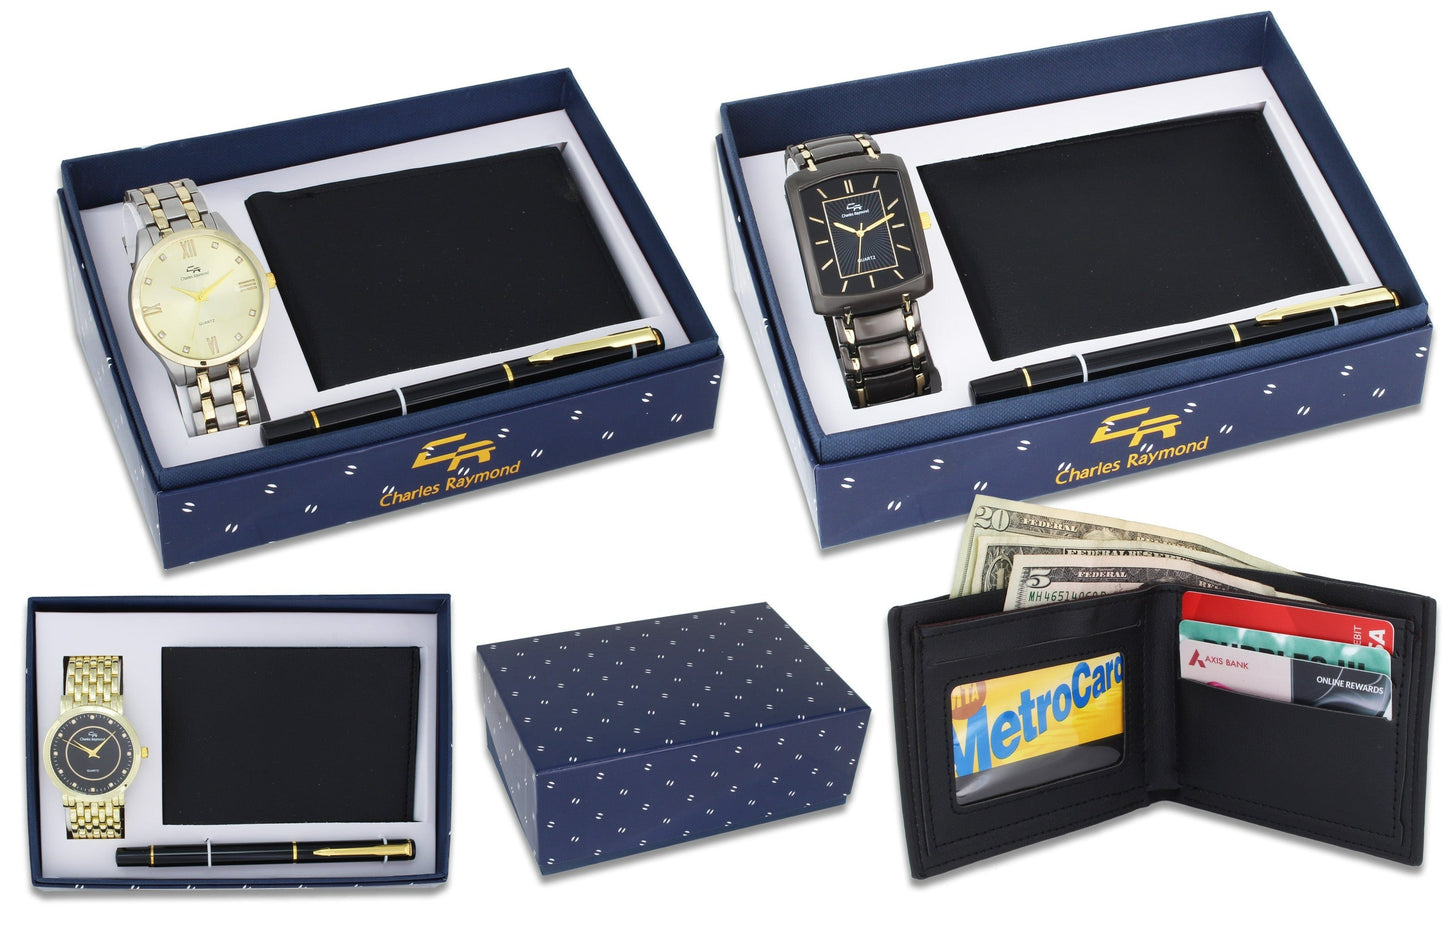 V0079 Classic TT Black Gold Watch, Black Wallet and Black Pen set